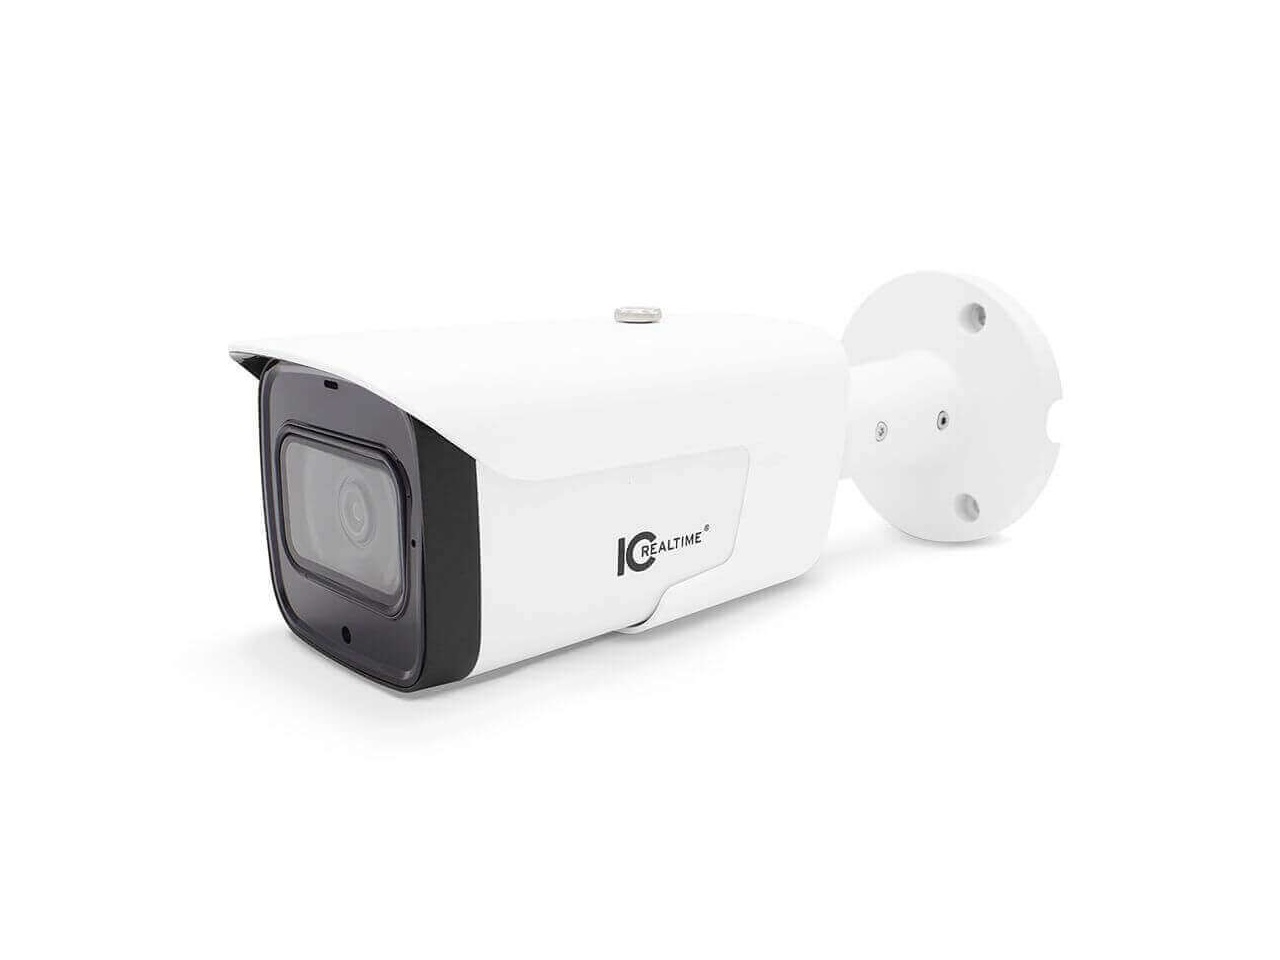 IPEG-B40V-IRW2 4MP IP Indoor/Outdoor Mid Size Bullet Camera/164ft Smart IR/PoE Capable by ICRealtime